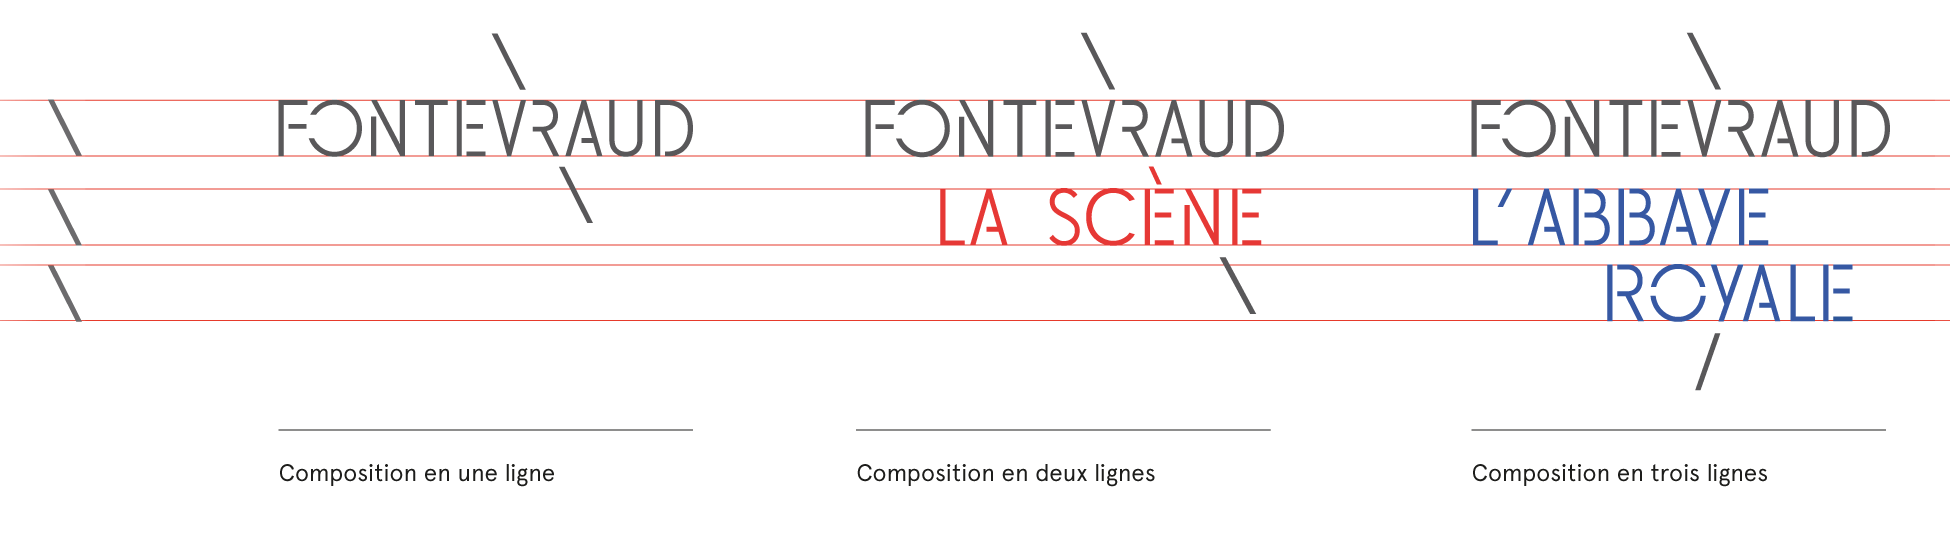 architecture-marque-Fontevraud